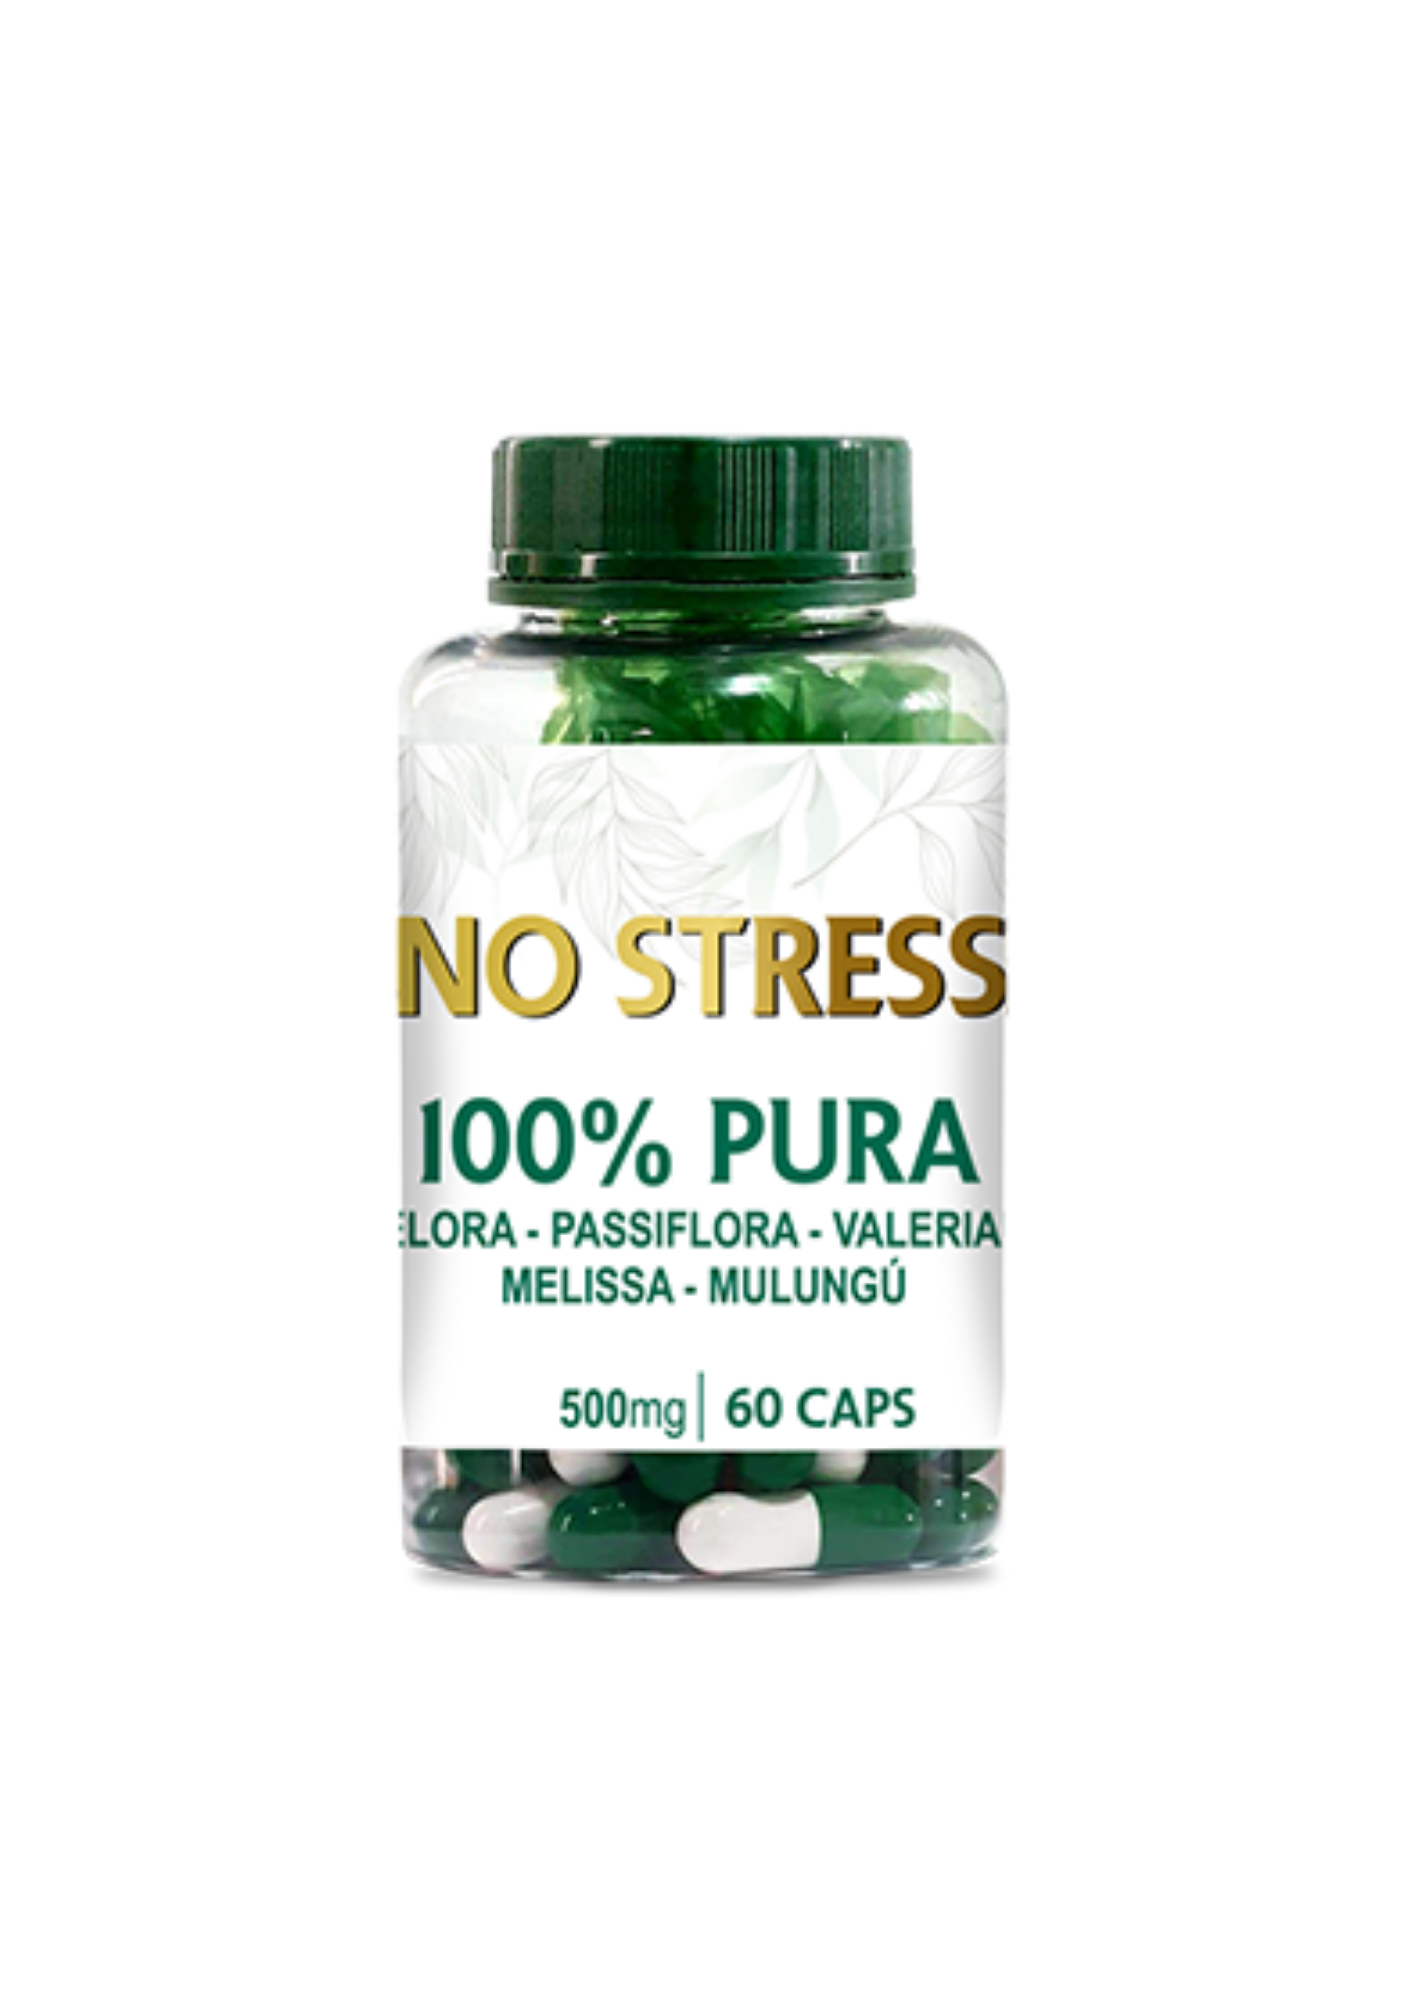  No Stress 500mg - C?psula Composta